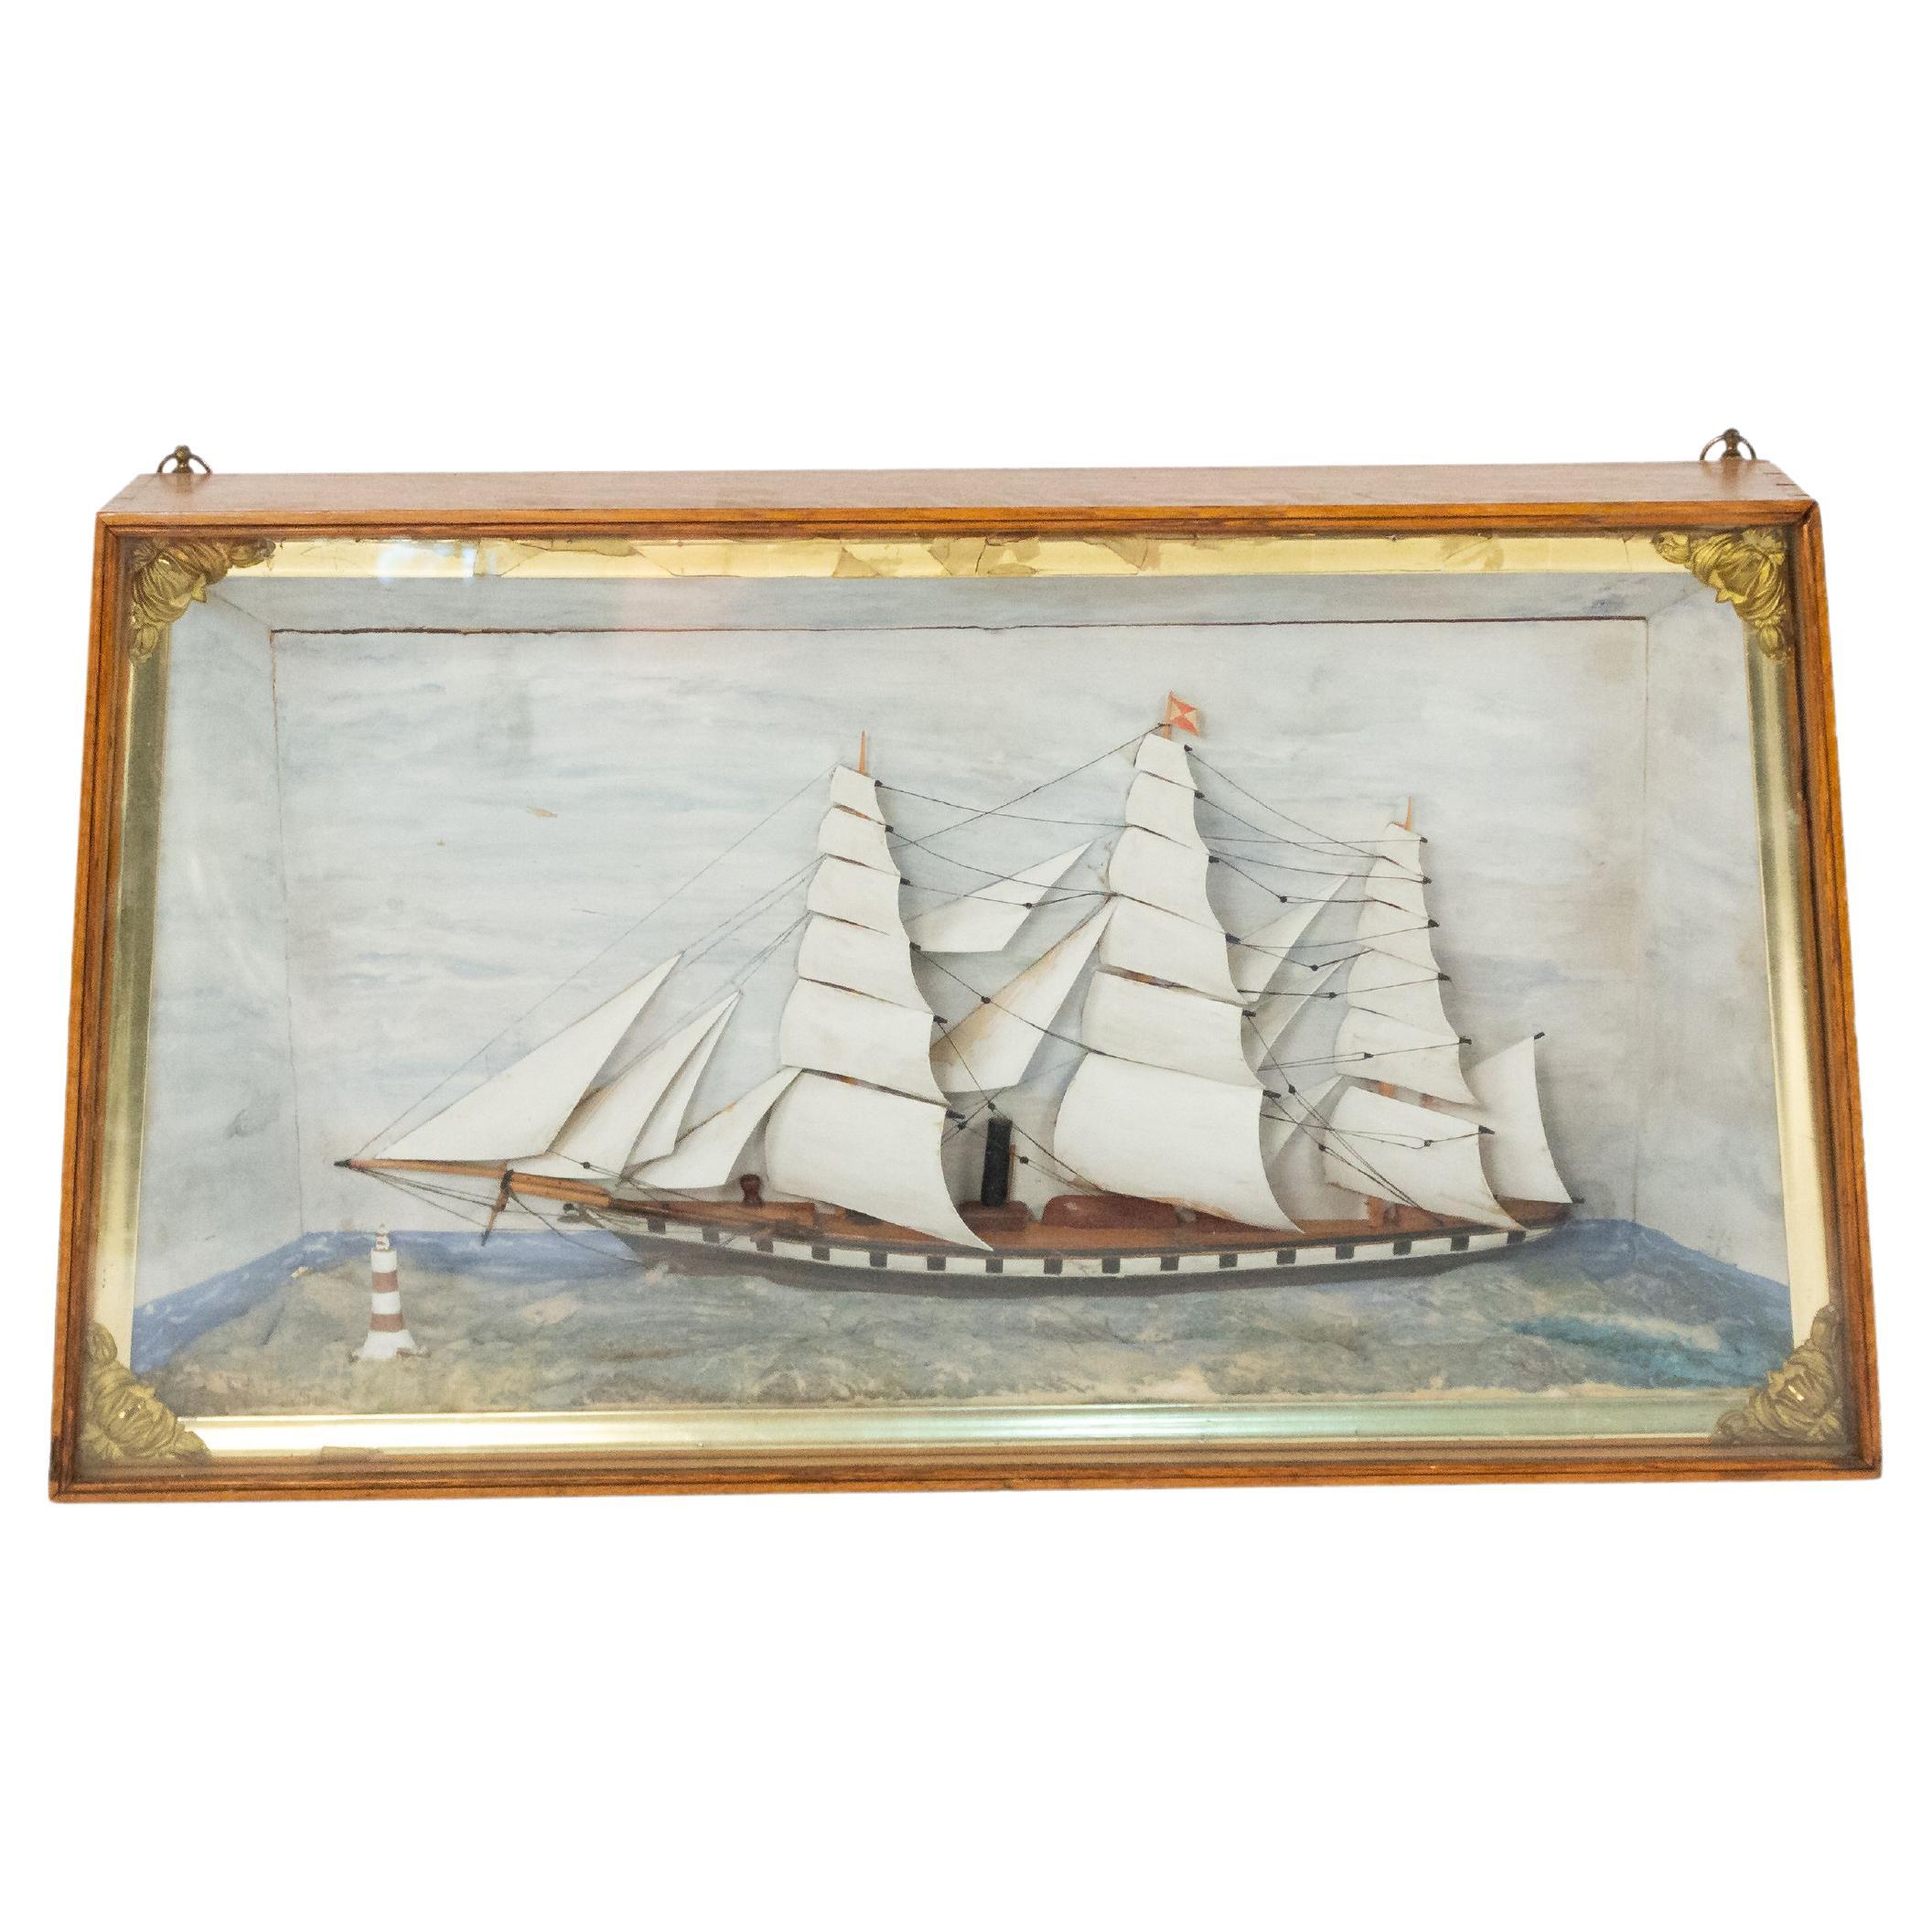 Victorian English Nautical Diorama Ship Wall Plaque